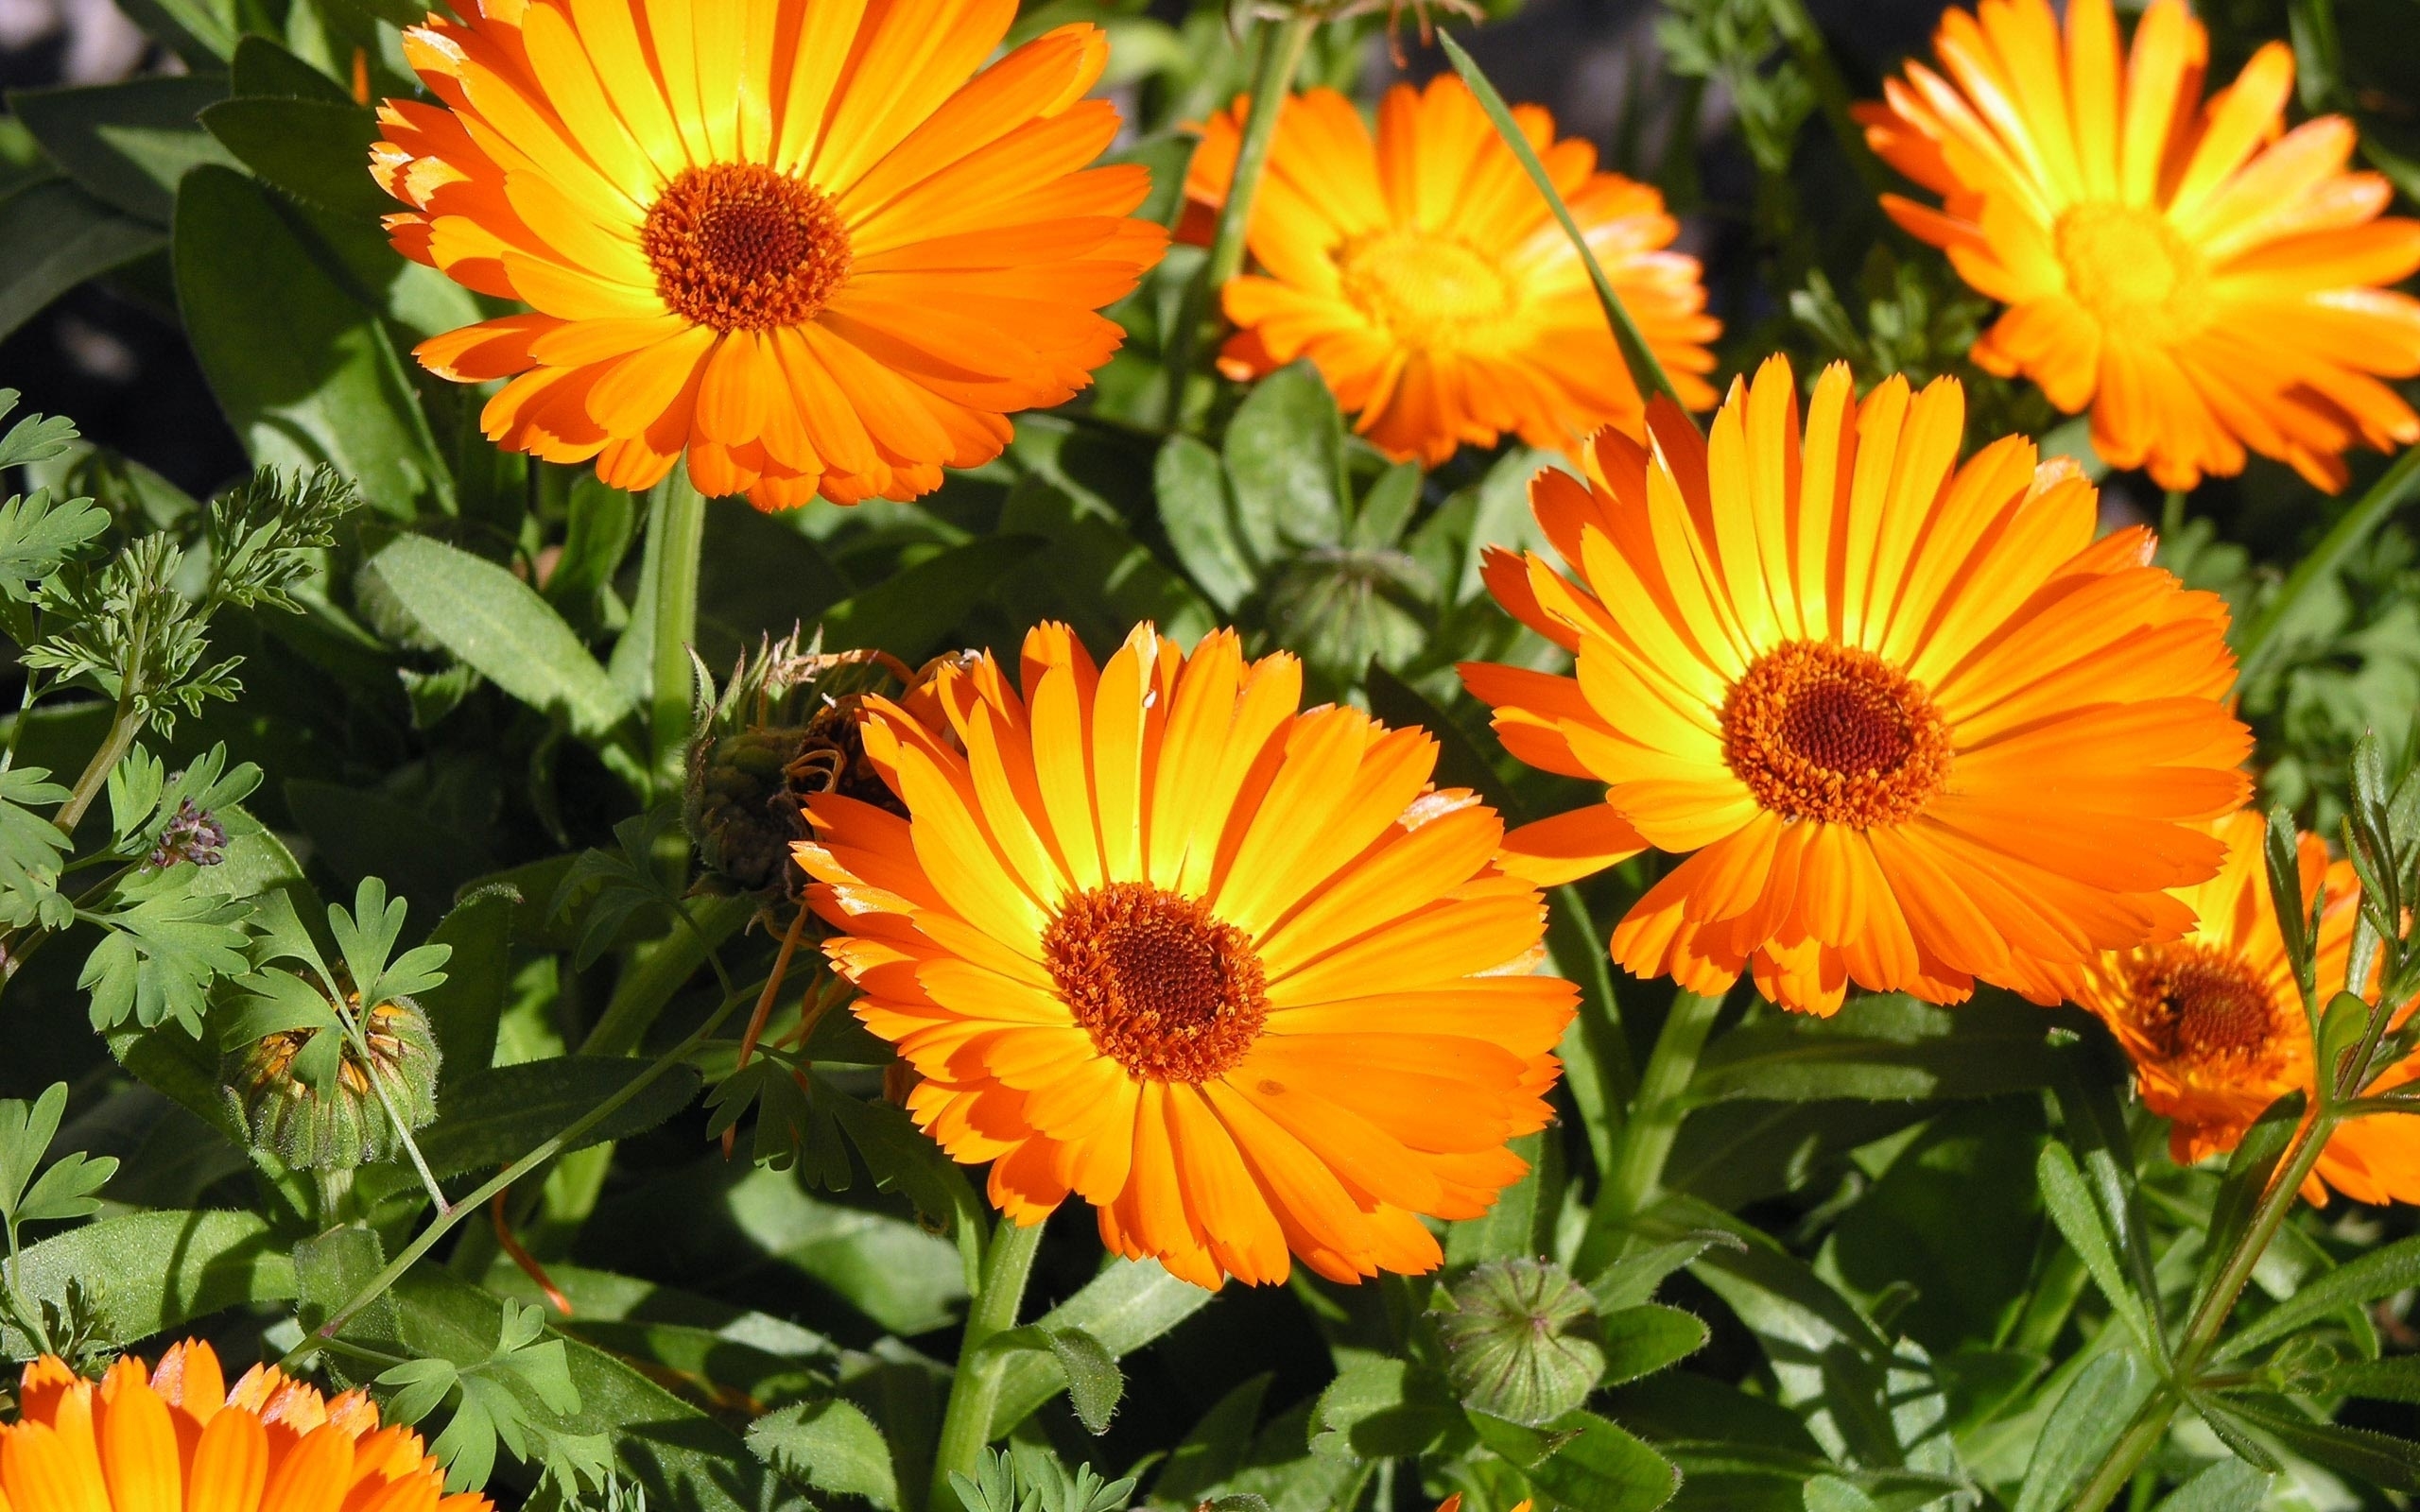 Sunbathing Flower for 2560 x 1600 widescreen resolution